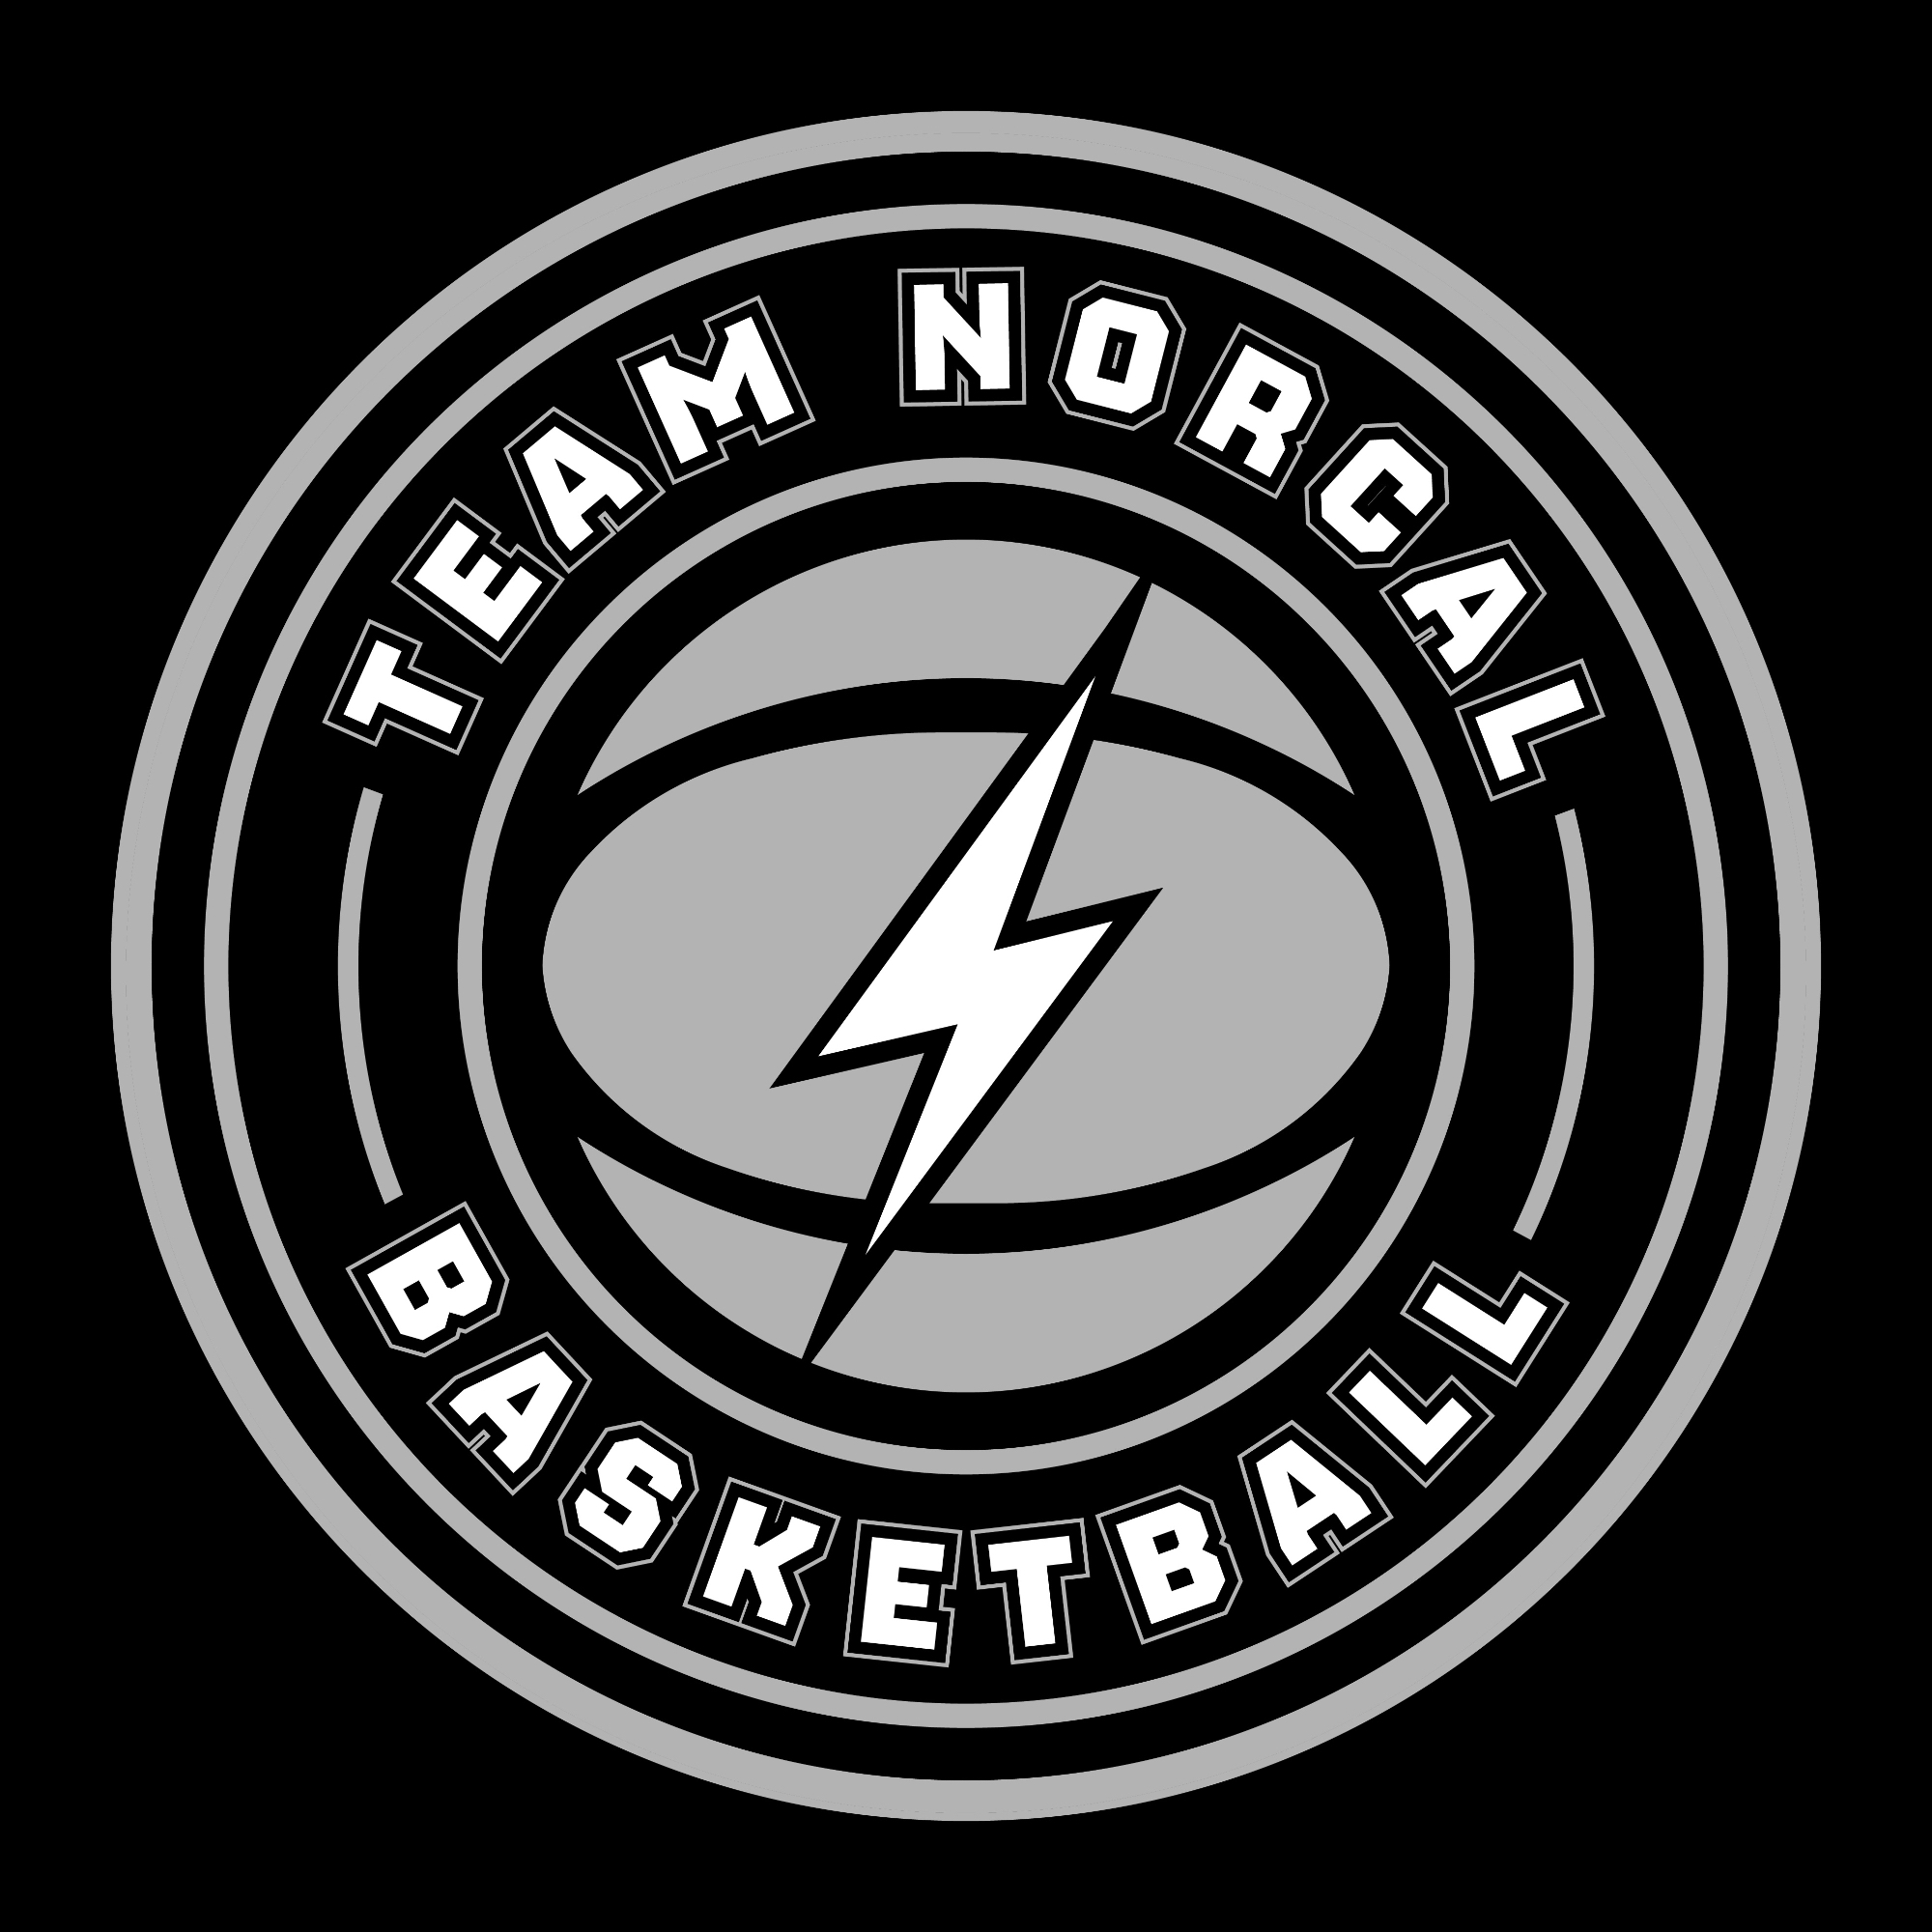 The official logo of Team Nor-Cal Basketball